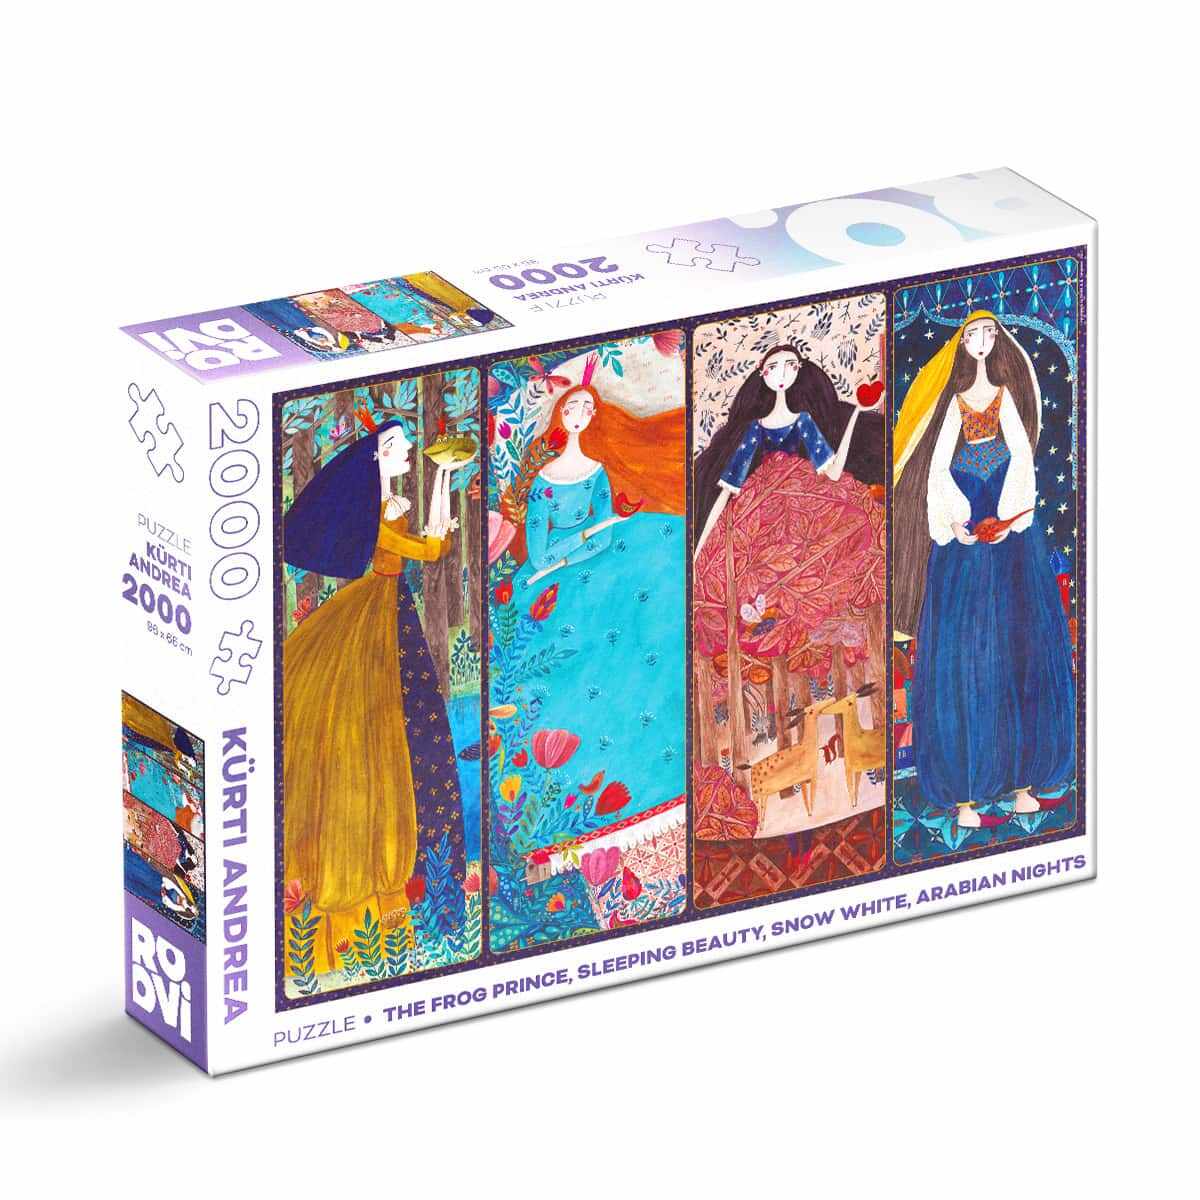 Puzzle Kürti Andrea - Puzzle adulți 2000 piese - The Frog Prince, Sleeping Beauty, Snow White, Arabian Nights